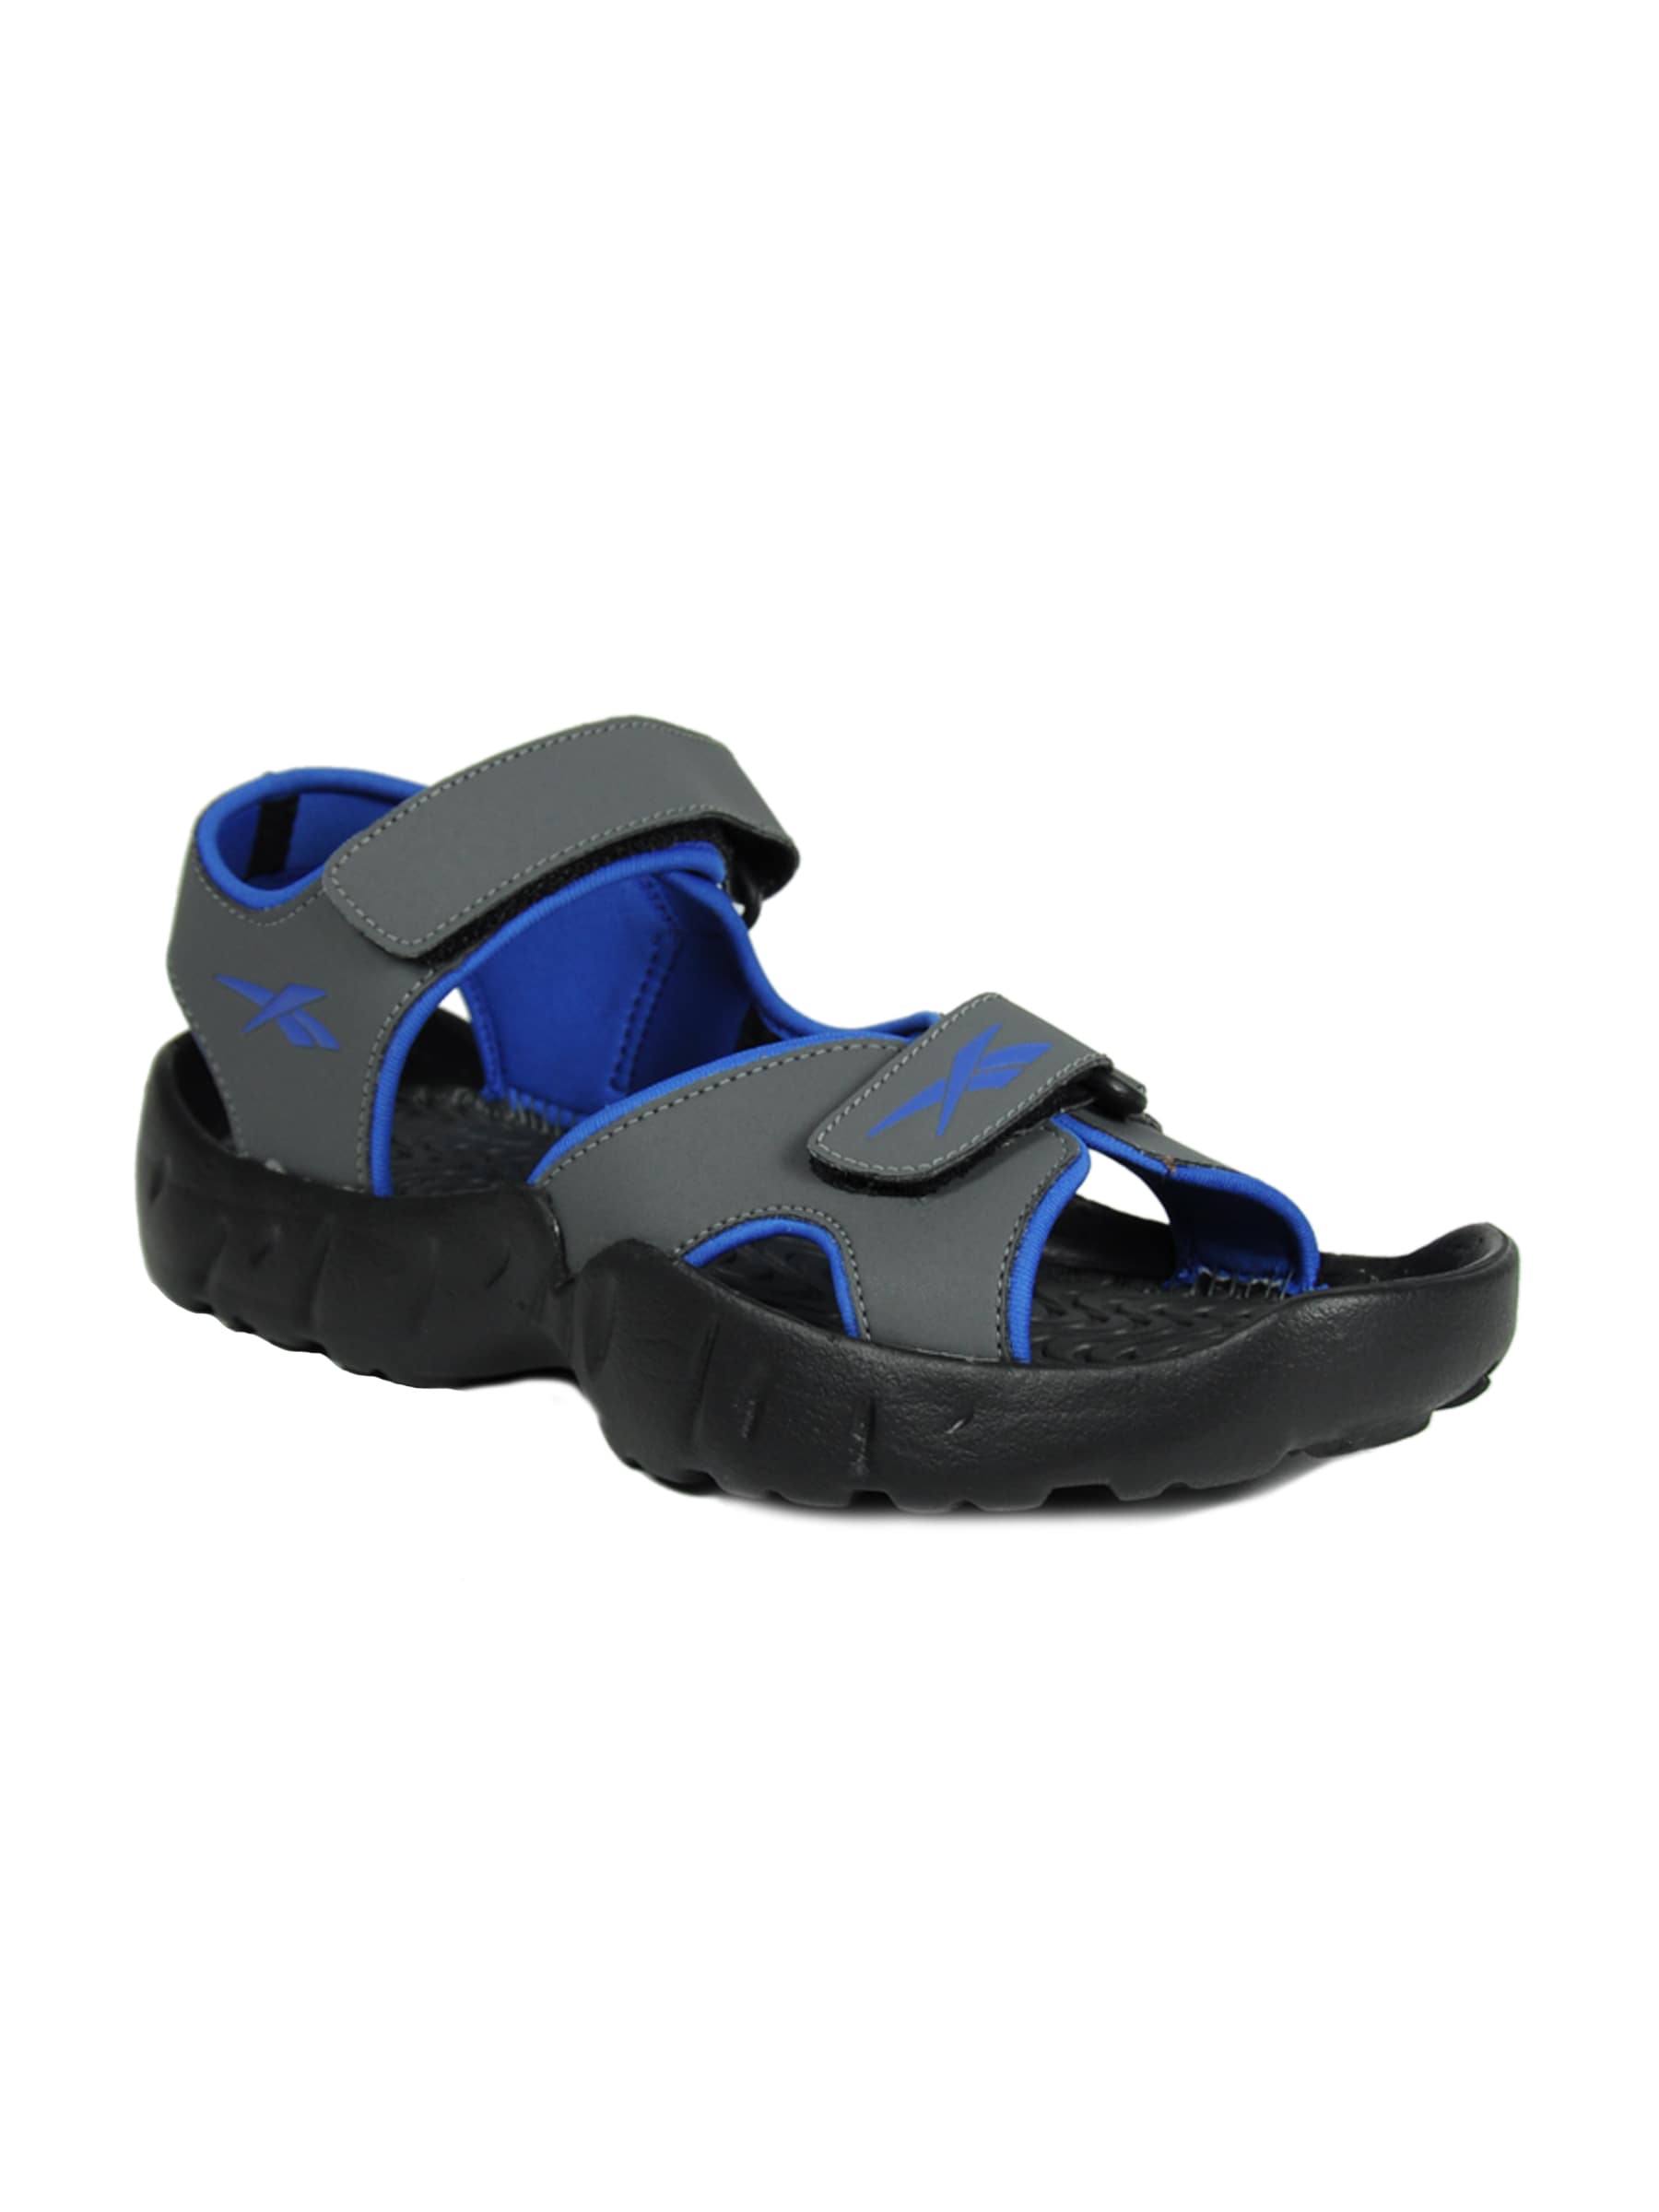 Reebok Unisex Adventure Sports Grey Sandals